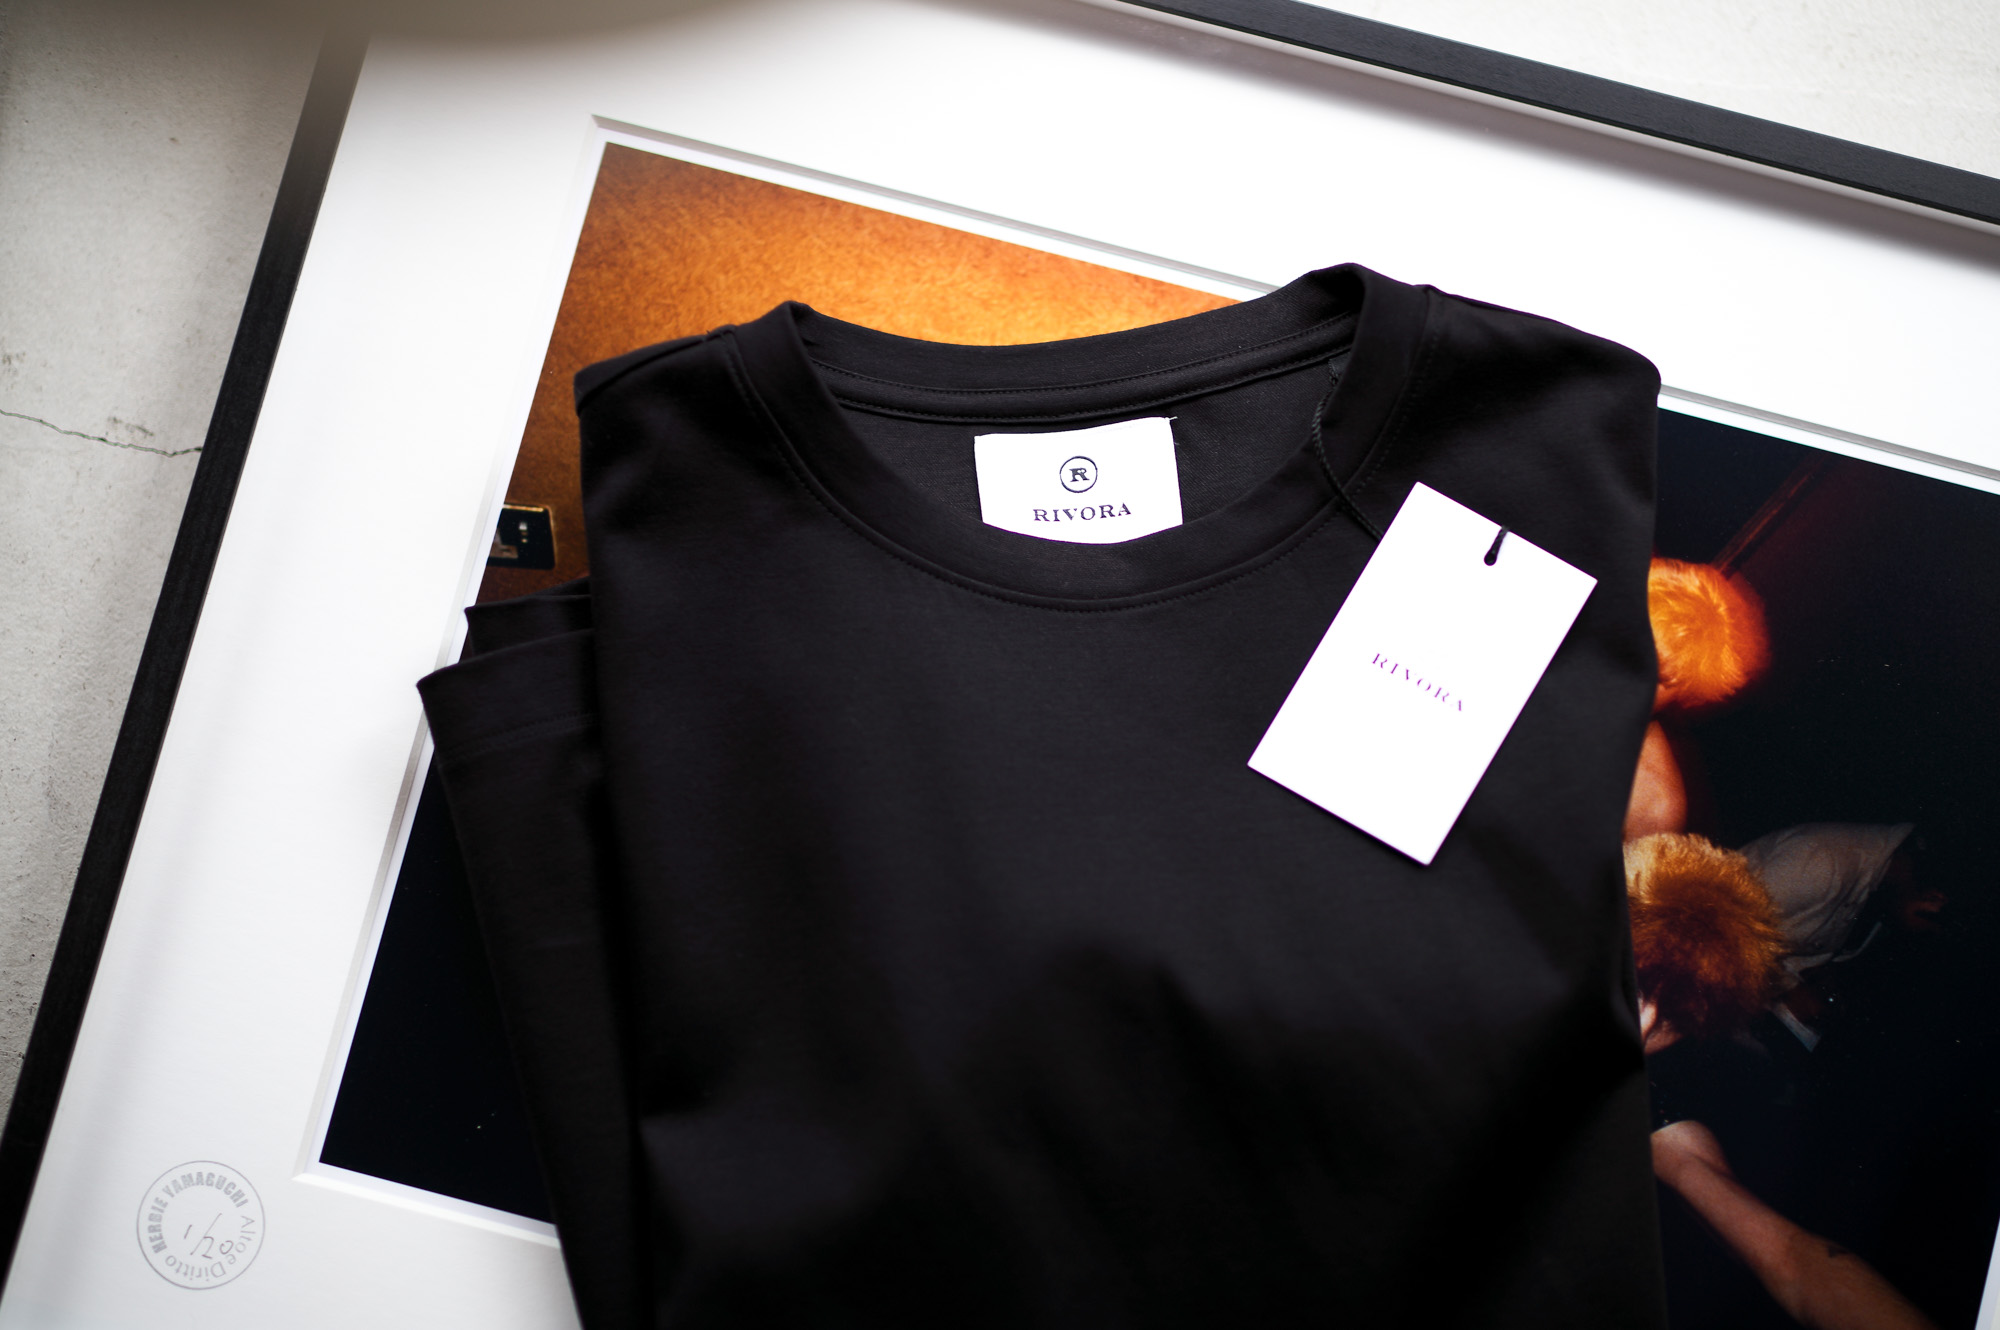 RIVORA (リヴォラ) Extra Fine Cotton T-Shirts エクストラファインコットン Tシャツ BLACK (ブラック・010) MADE IN JAPAN (日本製) 2023春夏新作 愛知 名古屋 Alto e Diritto altoediritto アルトエデリット